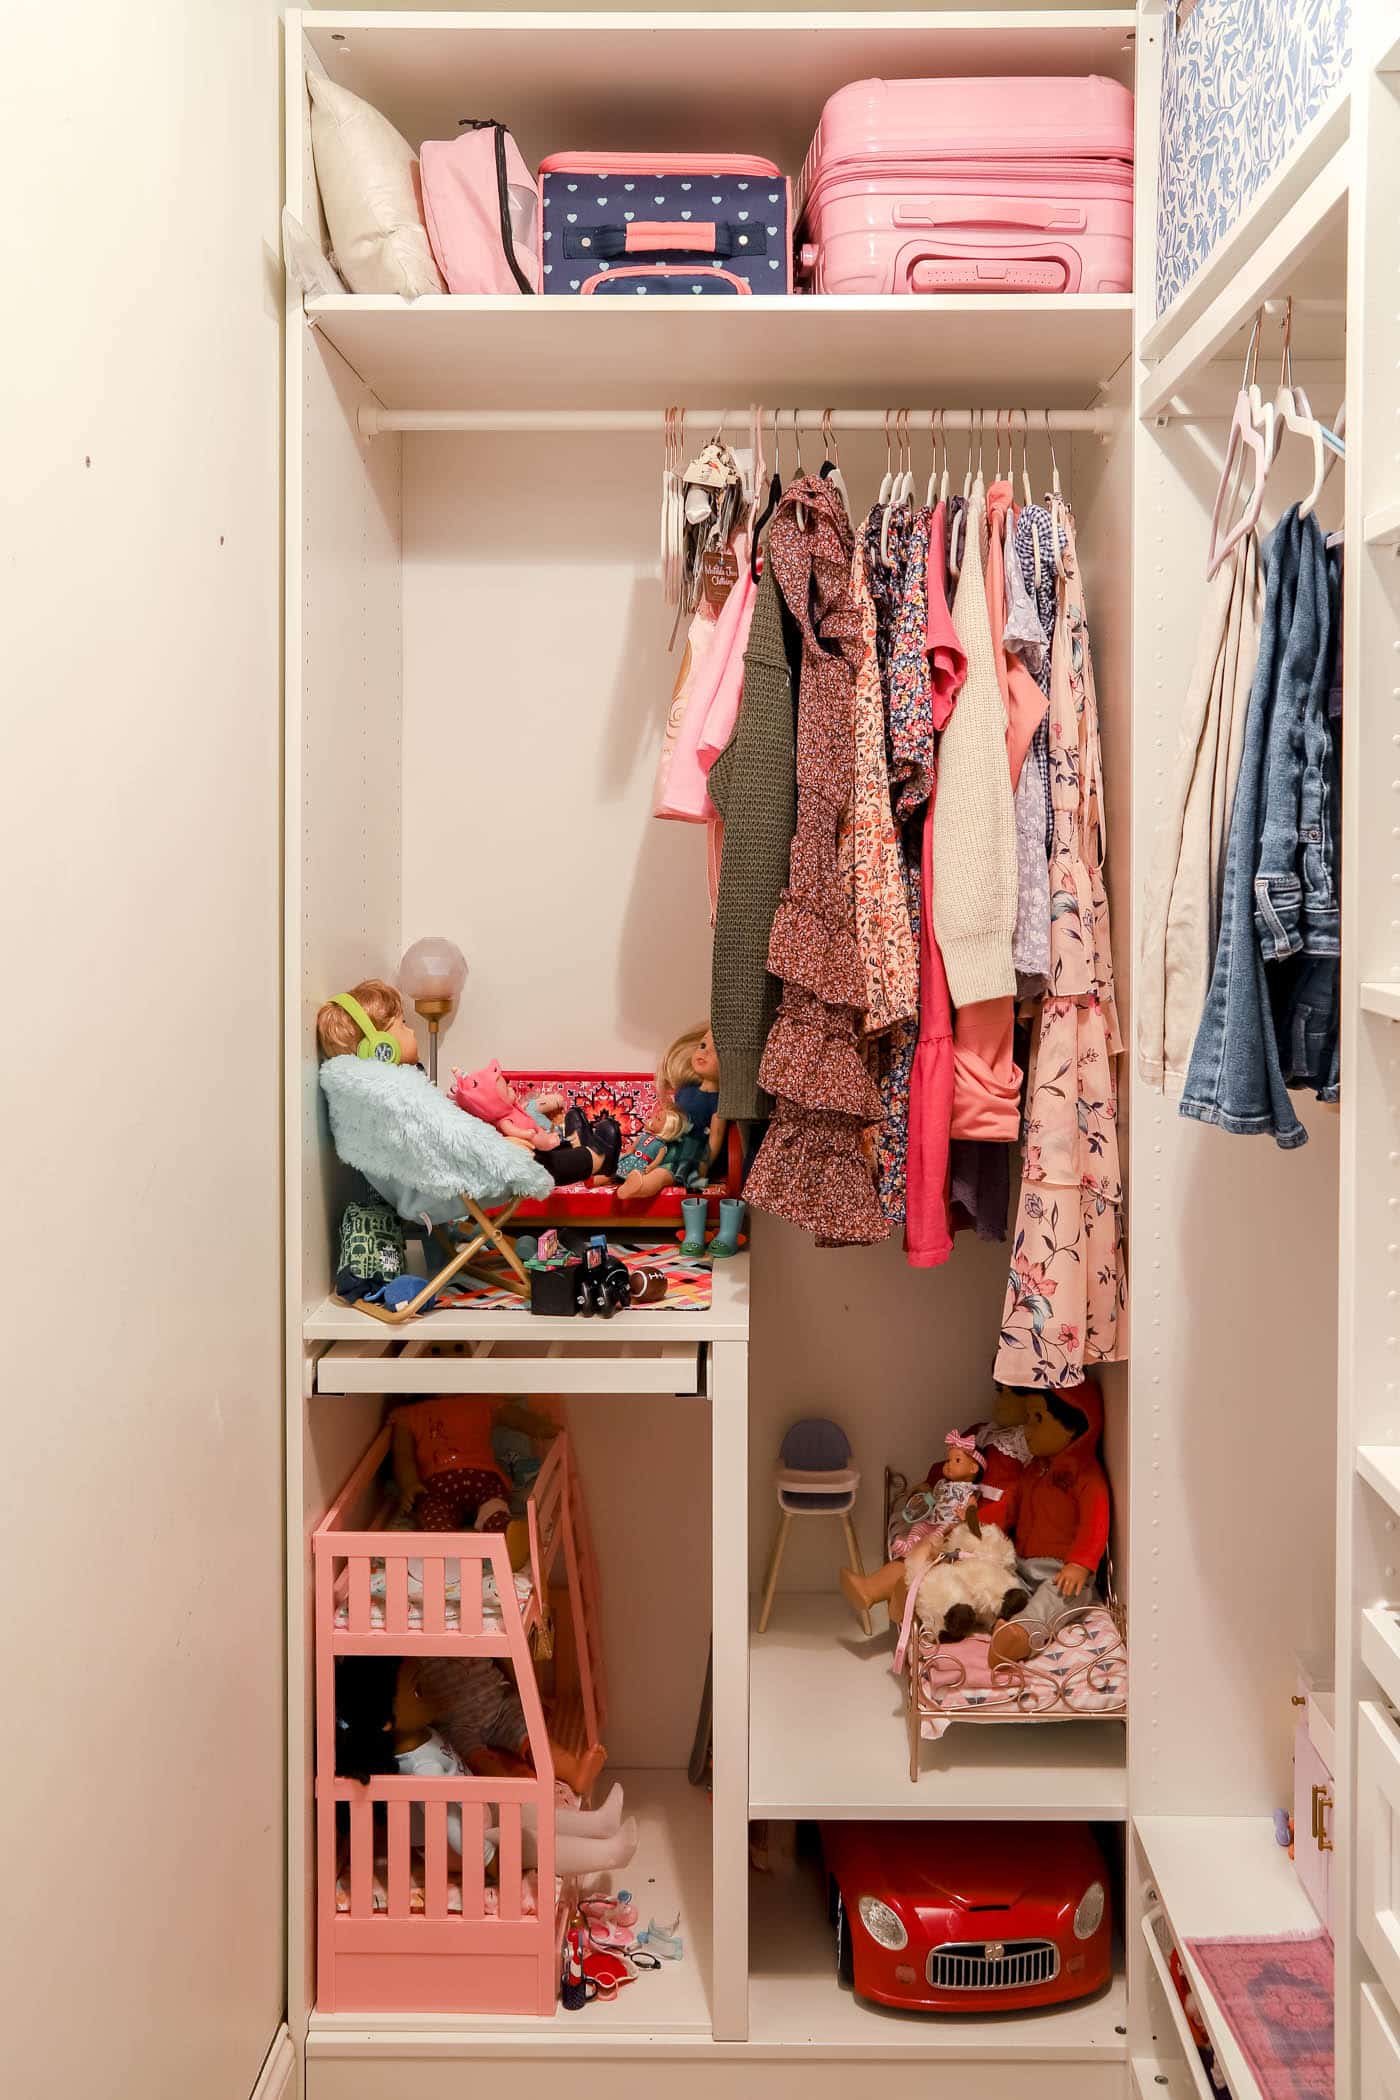 Basic Clothing Rail in PAX Wardrobe Closet System